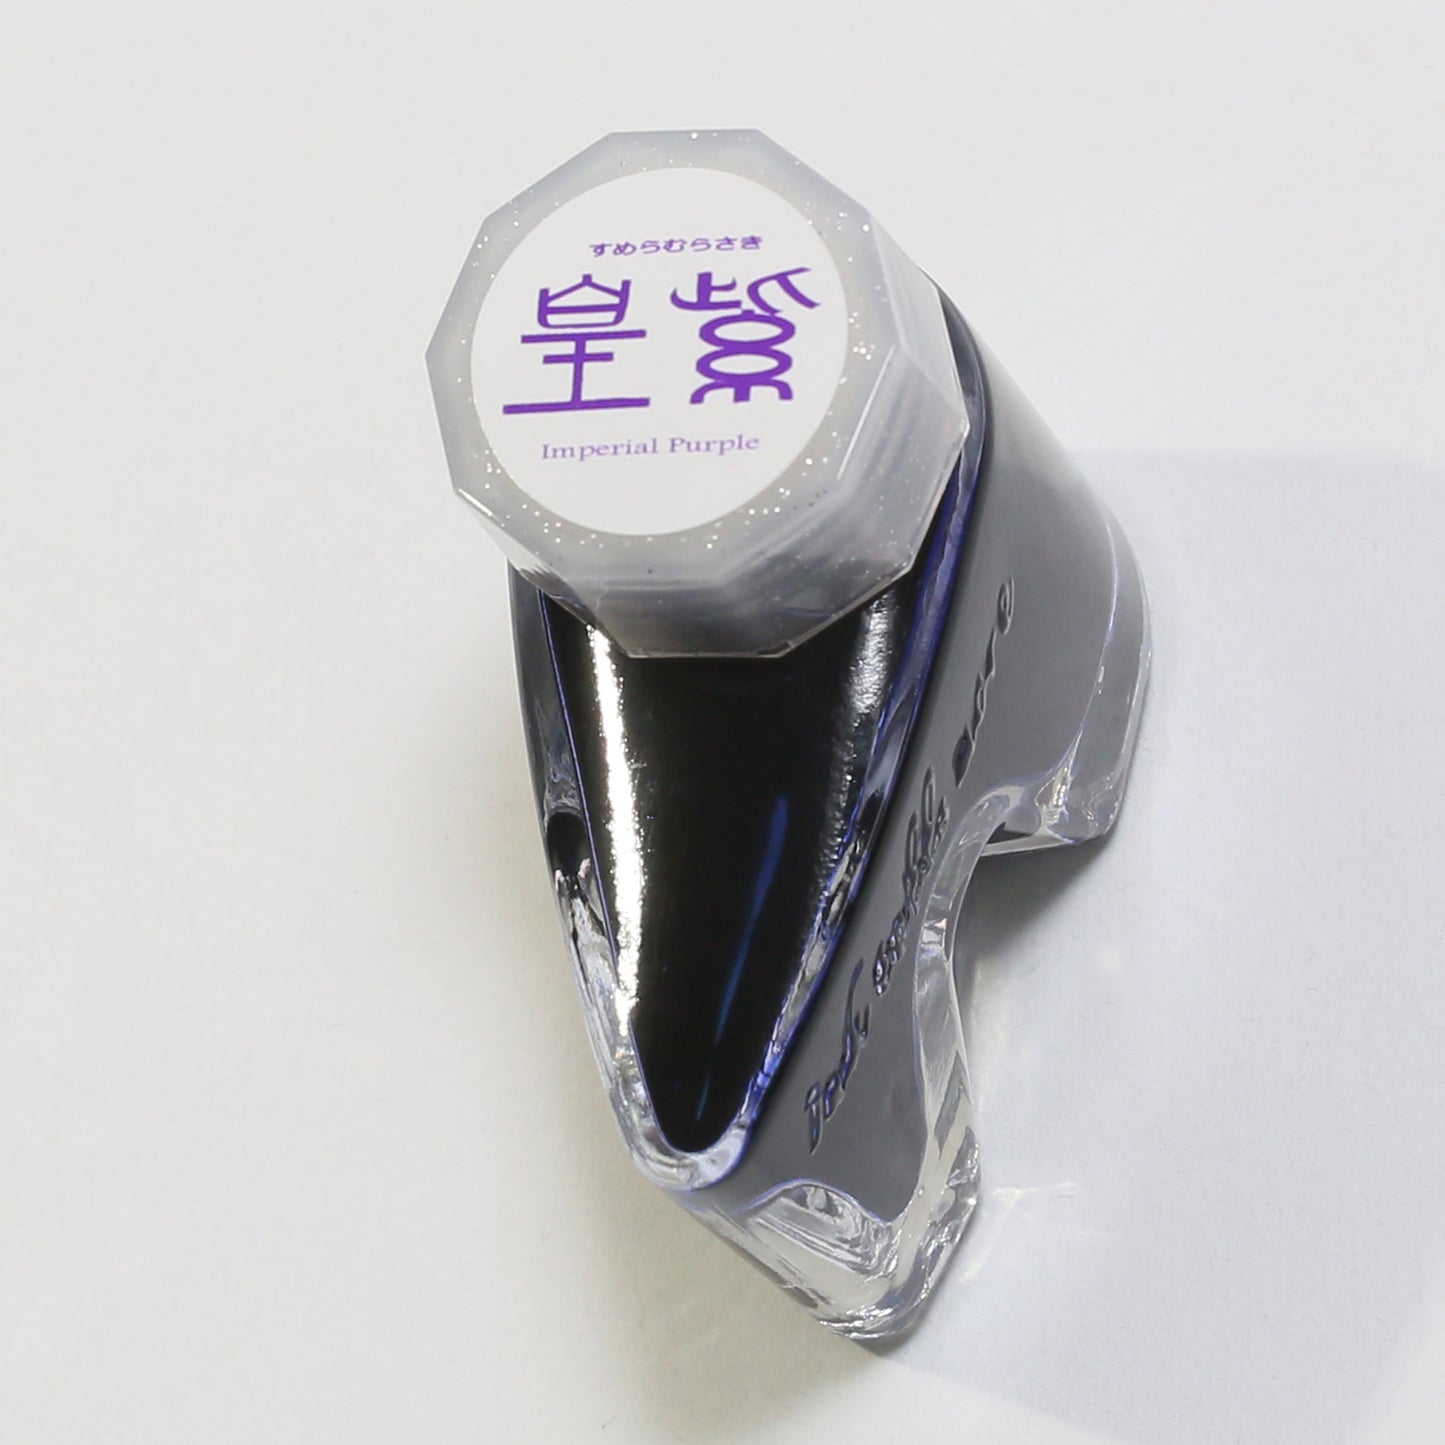 Ink tells more "Imperial Purple"